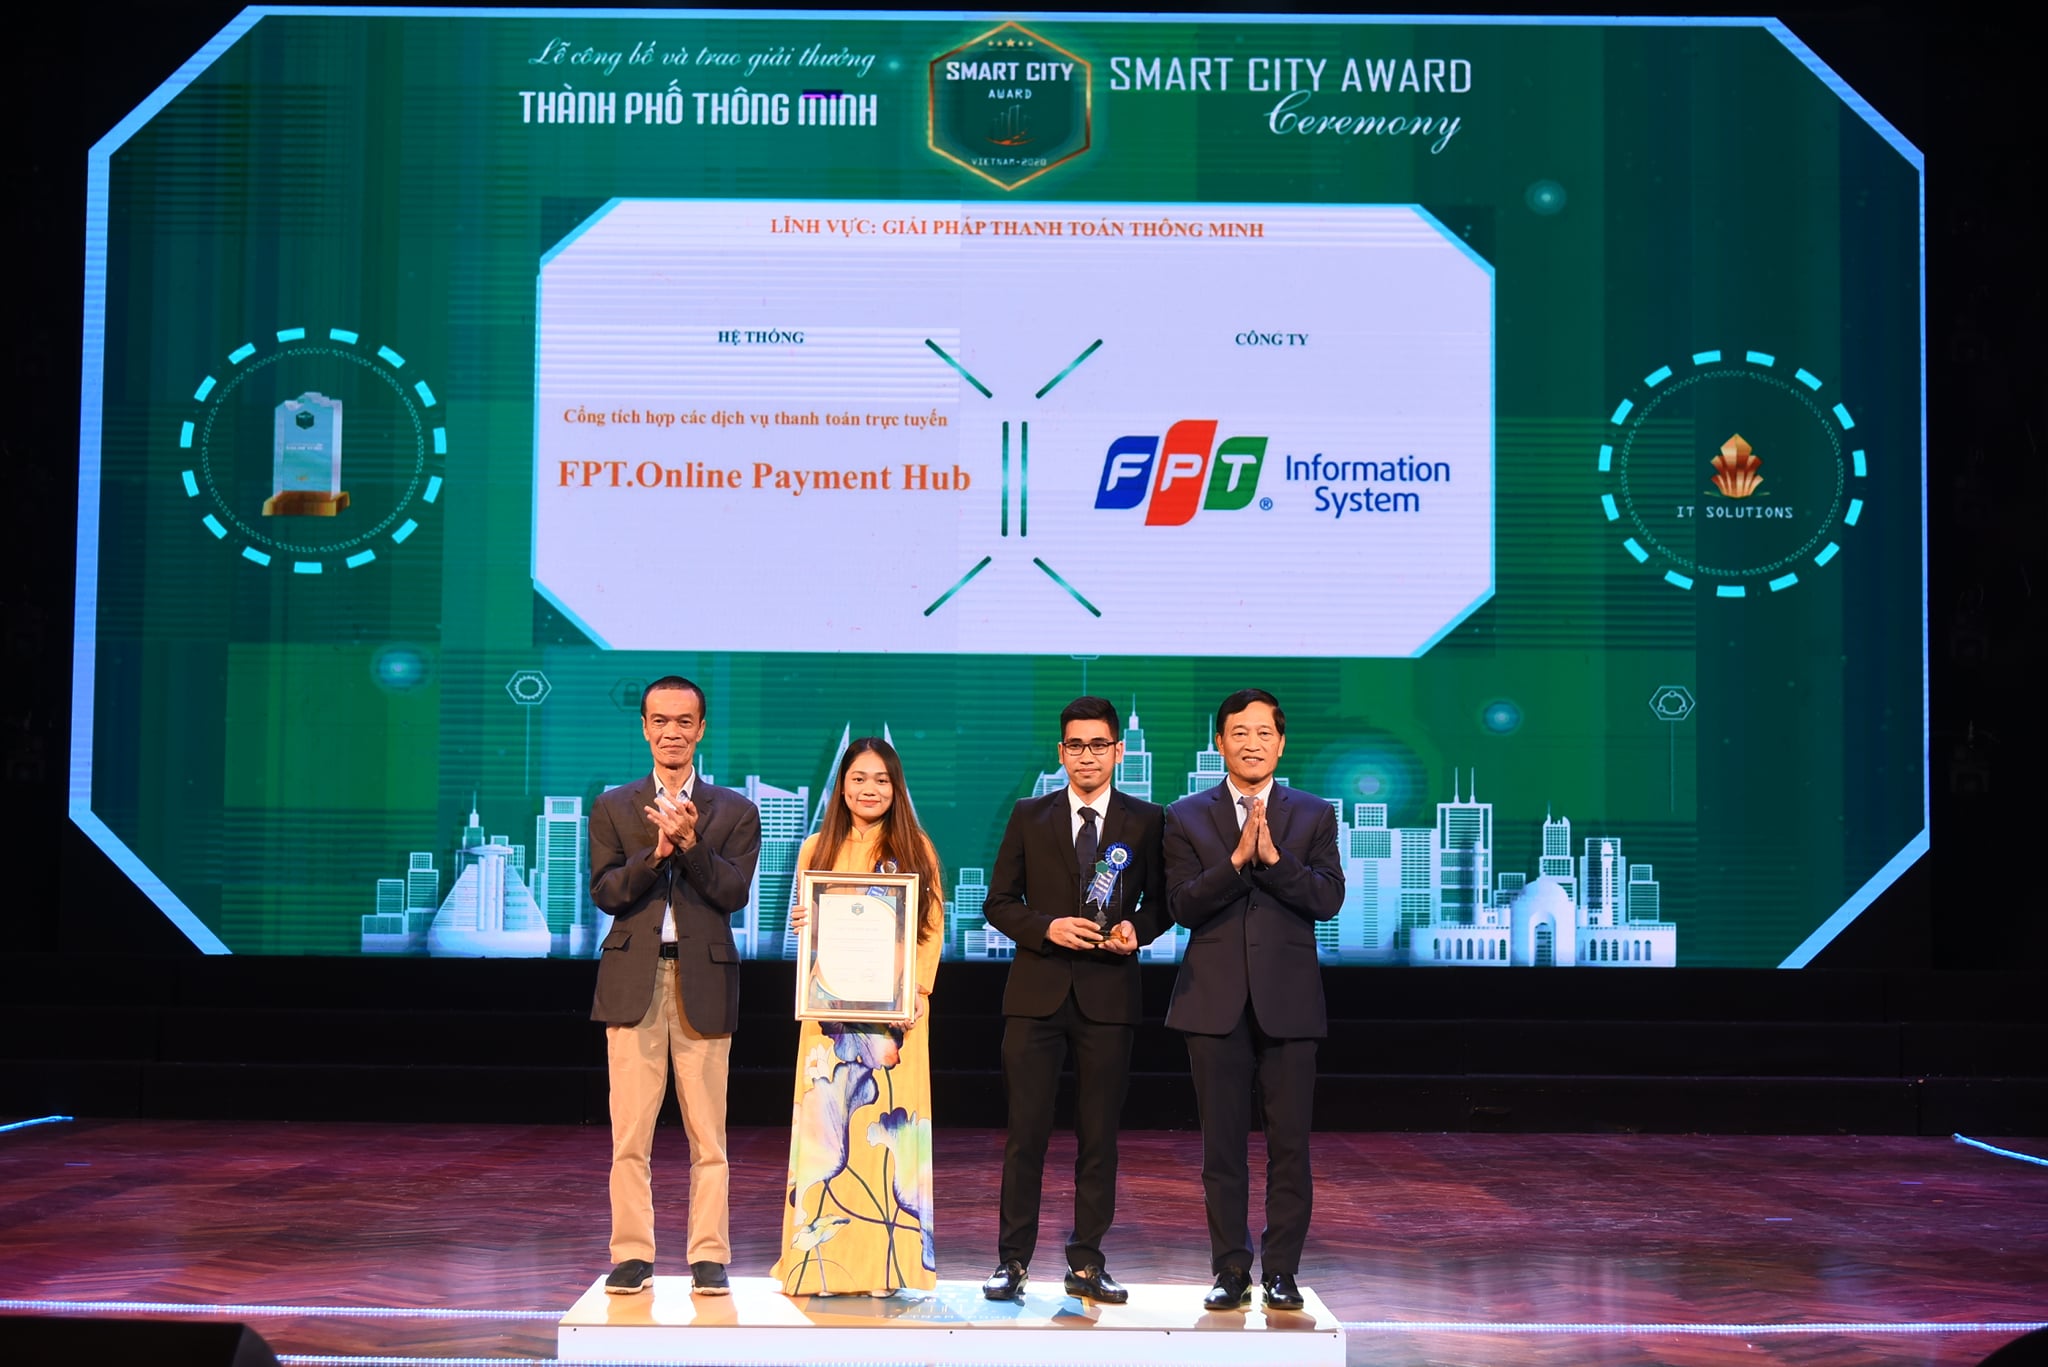 2020 Vietnam Smart City Awards – FPT.Online Payment Hub